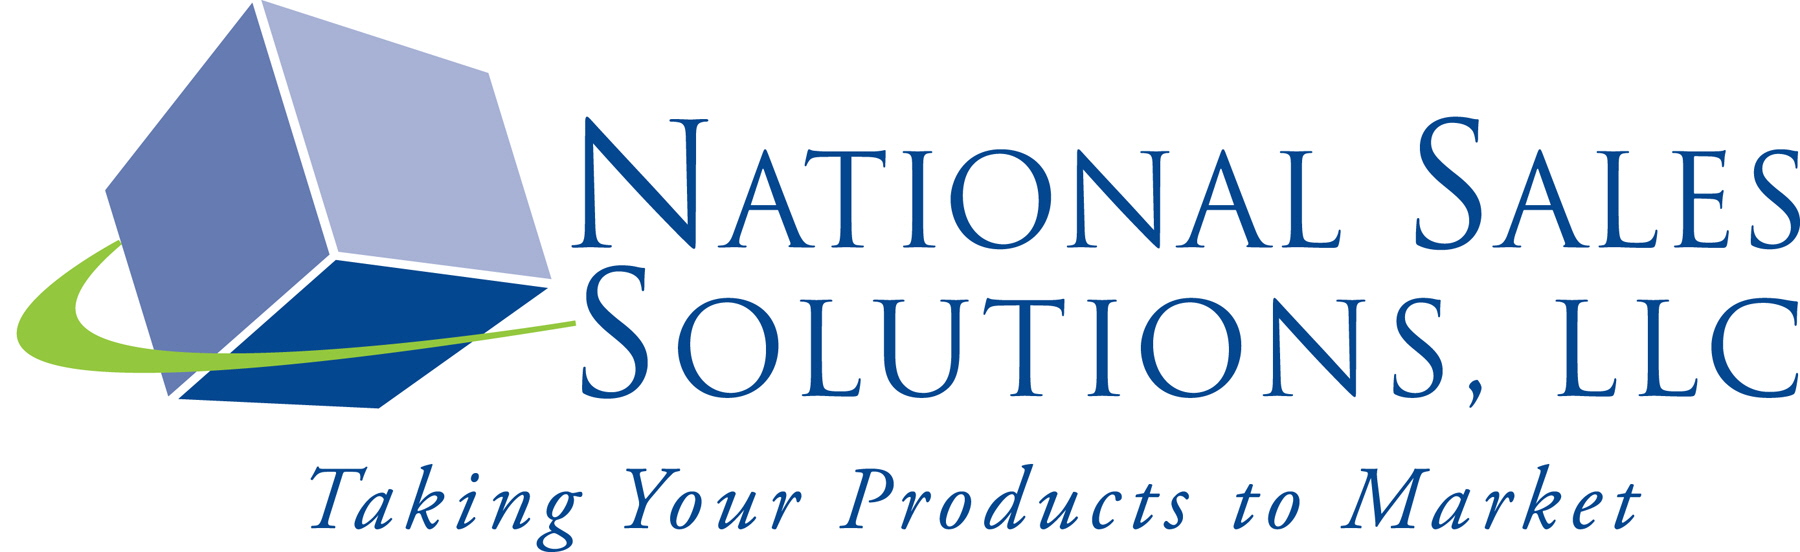 National Sales Solutions, LLC